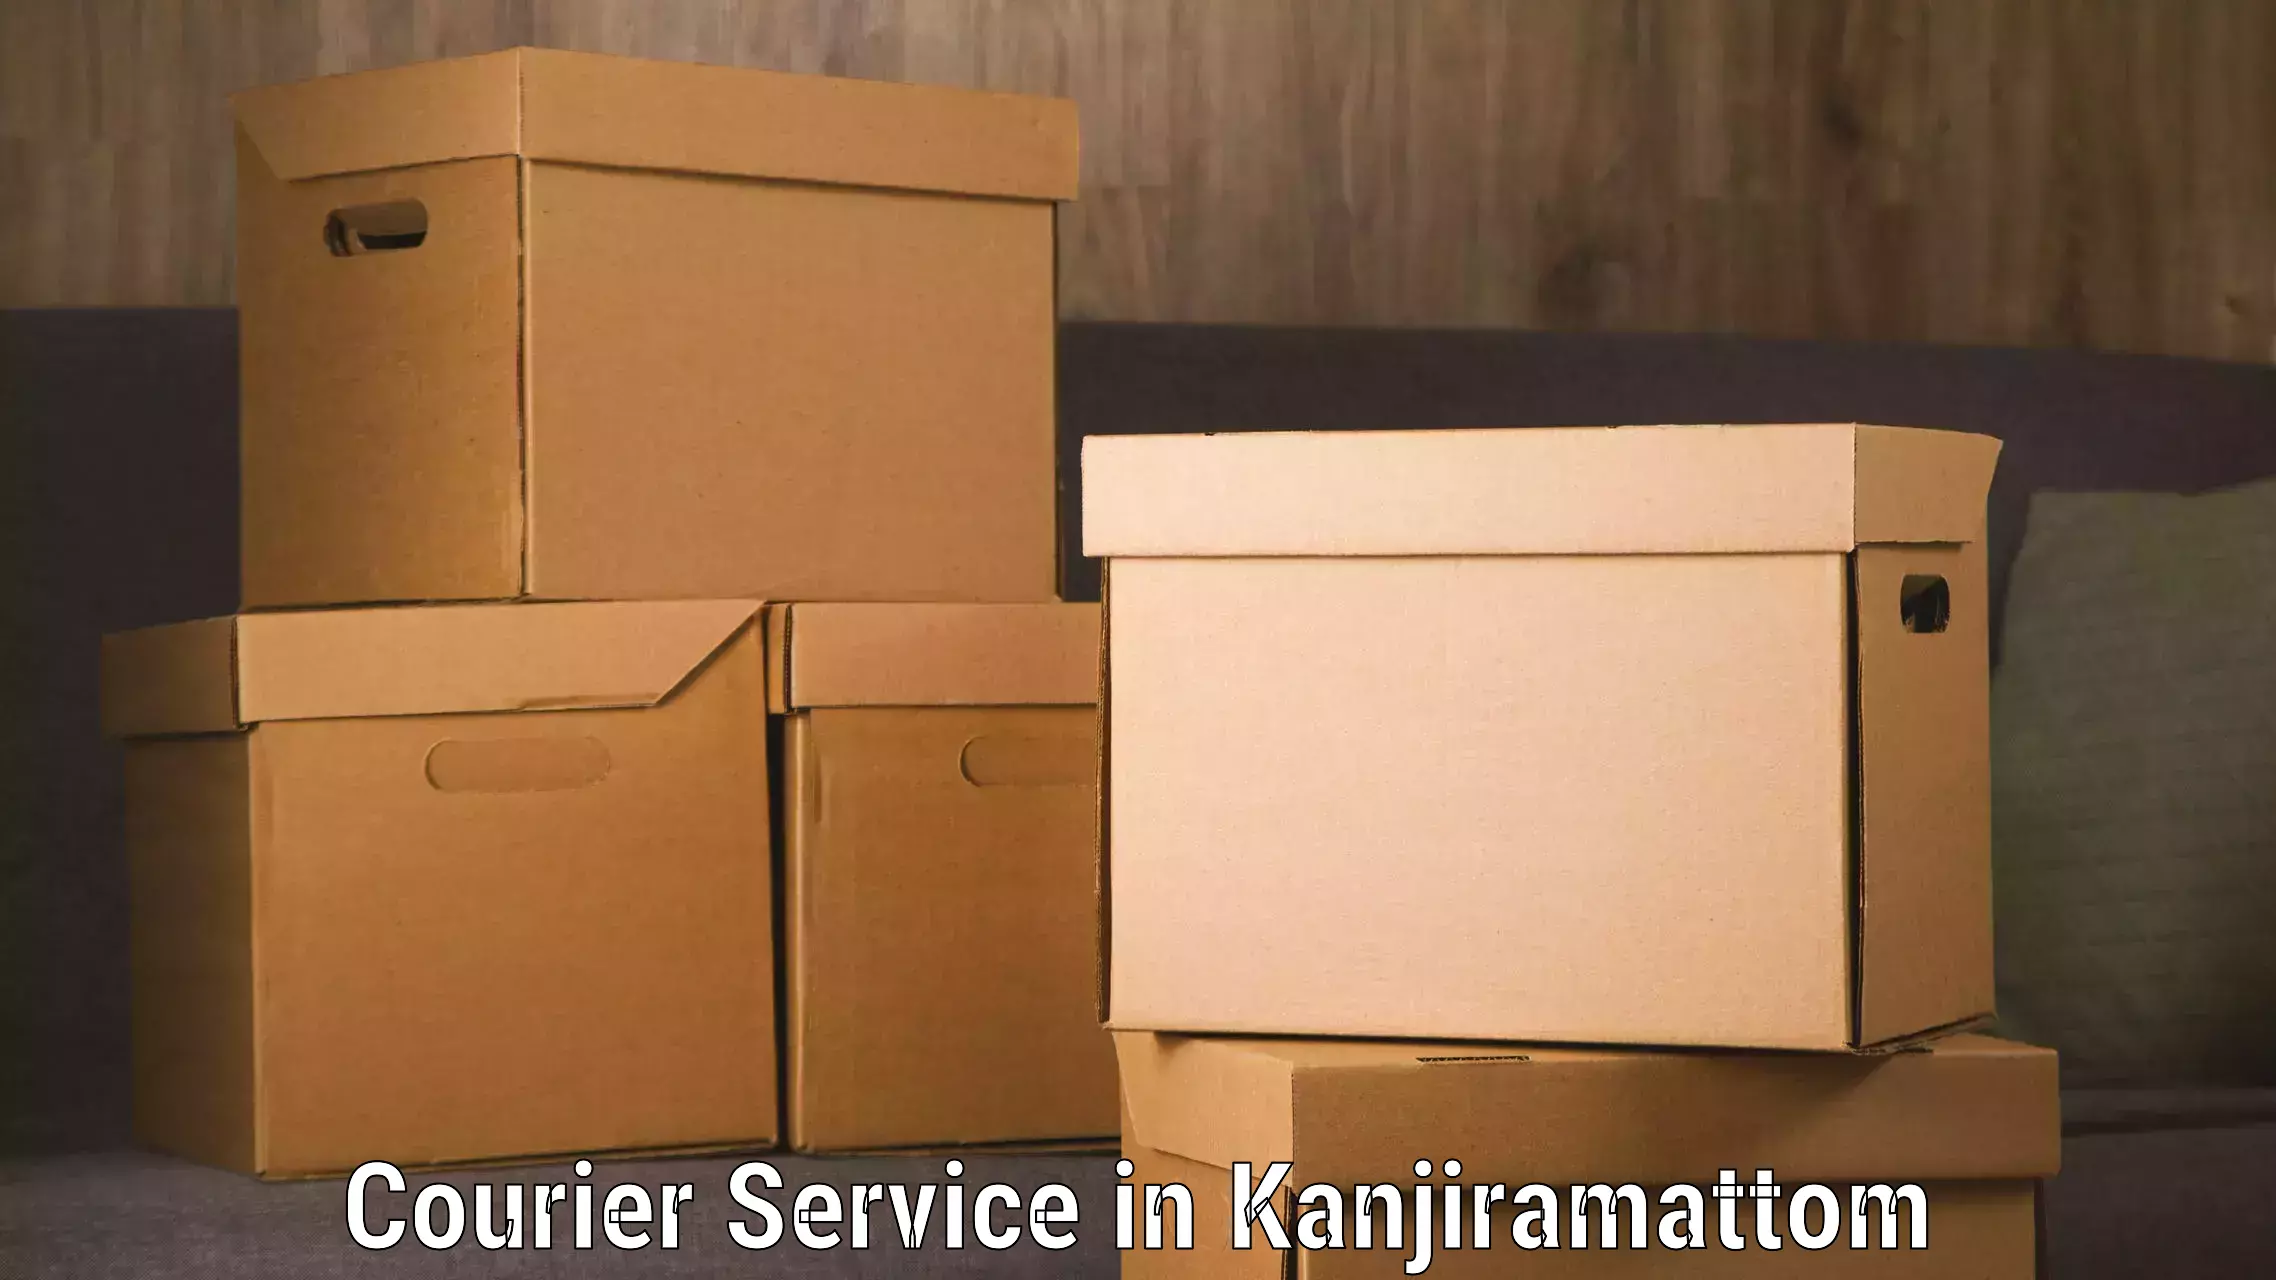 Cash on delivery service in Kanjiramattom